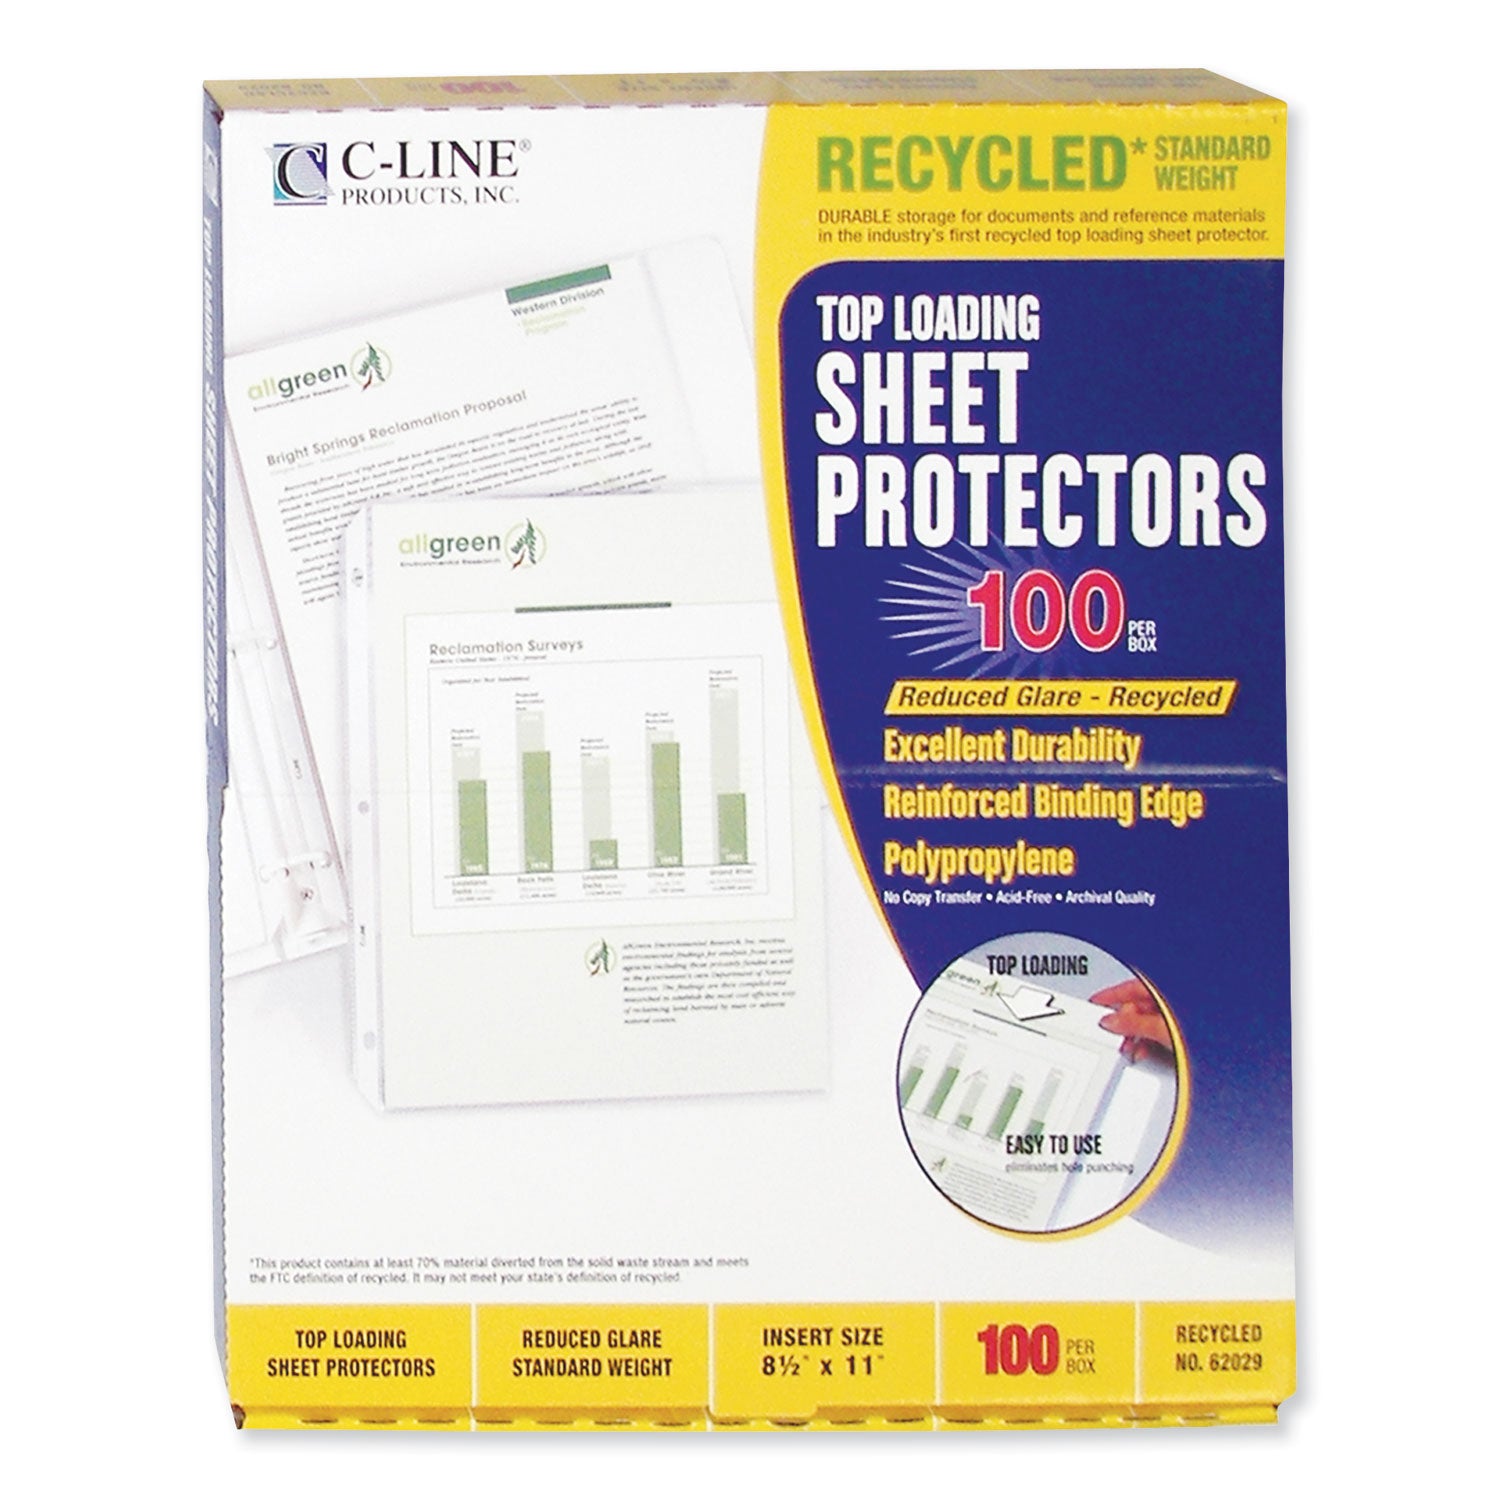 recycled-polypropylene-sheet-protectors-reduced-glare-2-11-x-85-100-box_cli62029 - 6